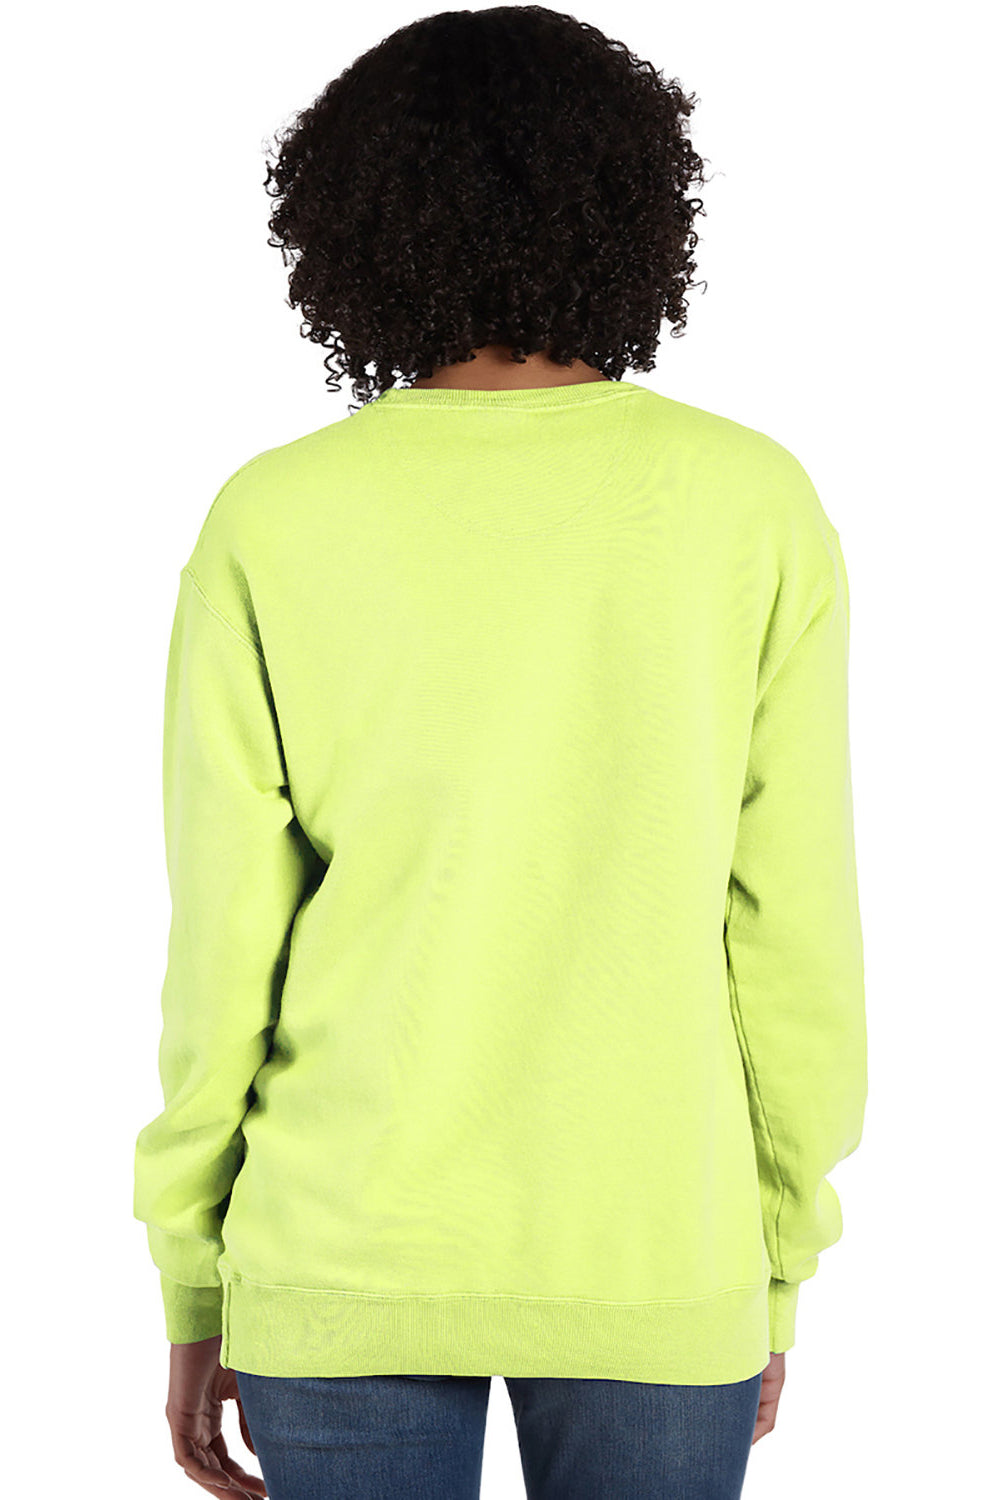 ComfortWash by Hanes GDH400 Mens Crewneck Sweatshirt Chic Lime Green Back